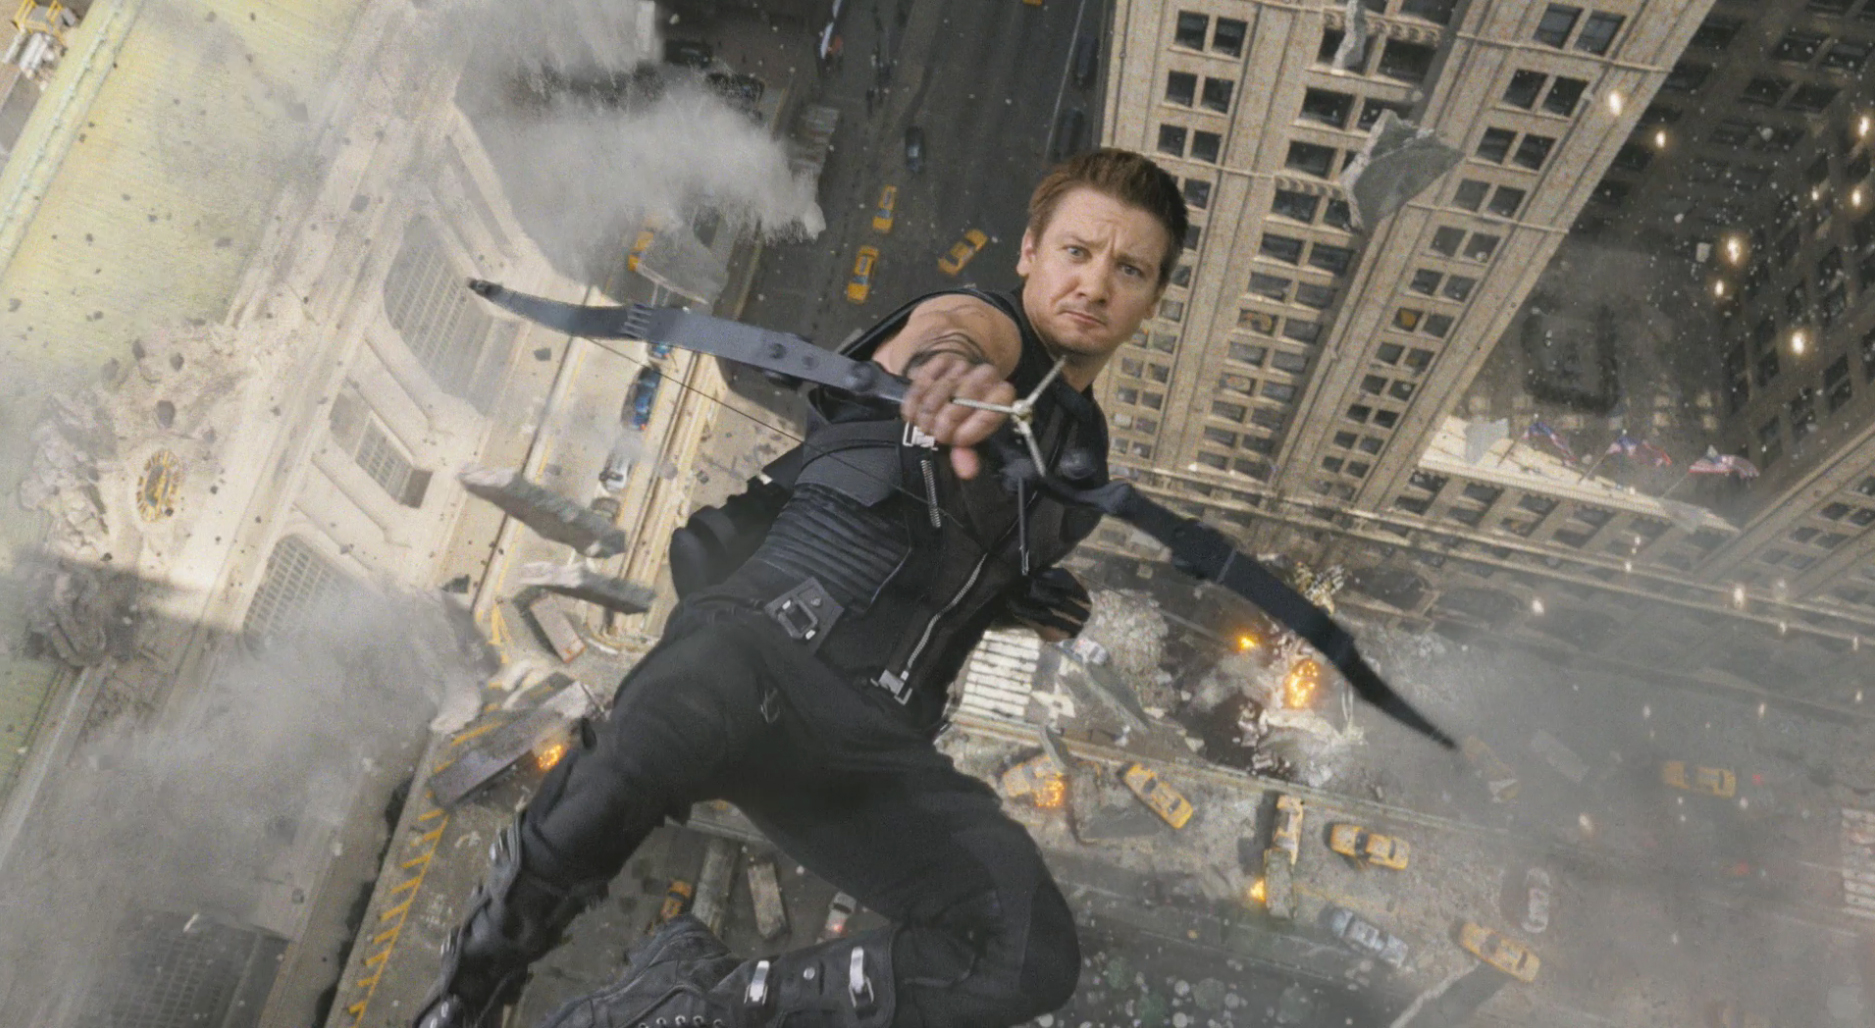 Jeremy as Hawkeye